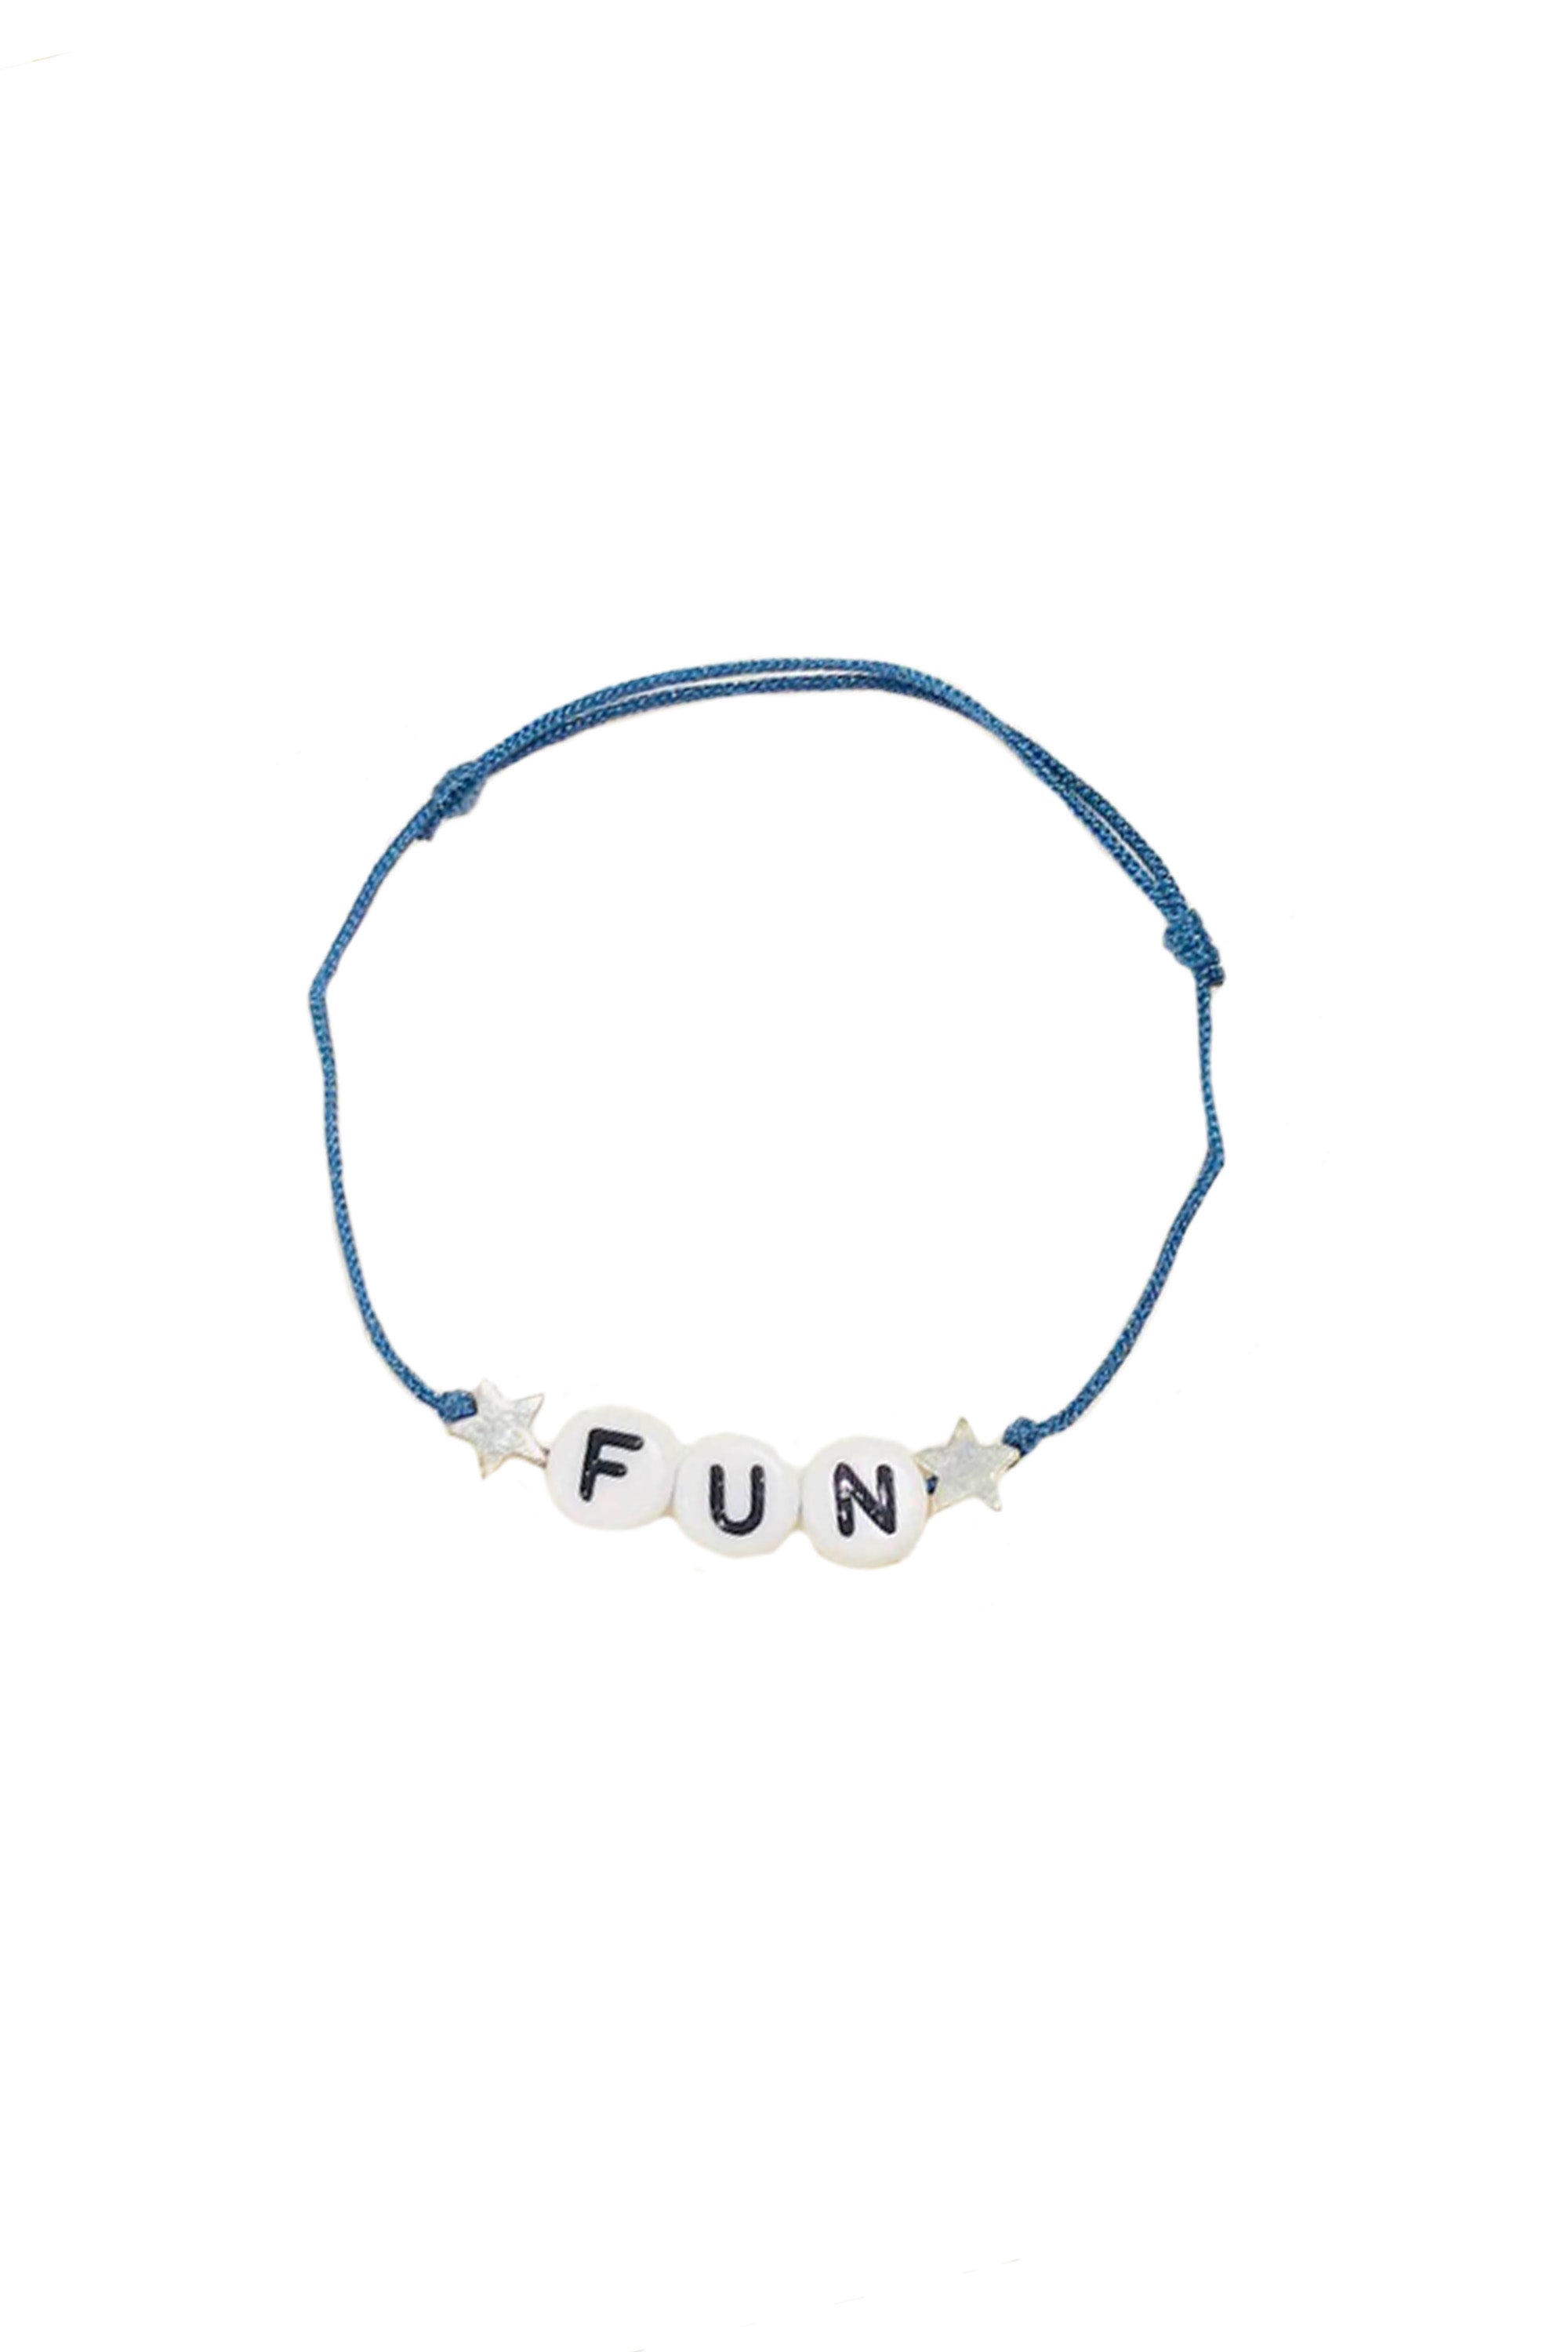 Bbuble "Fun" Bracelet